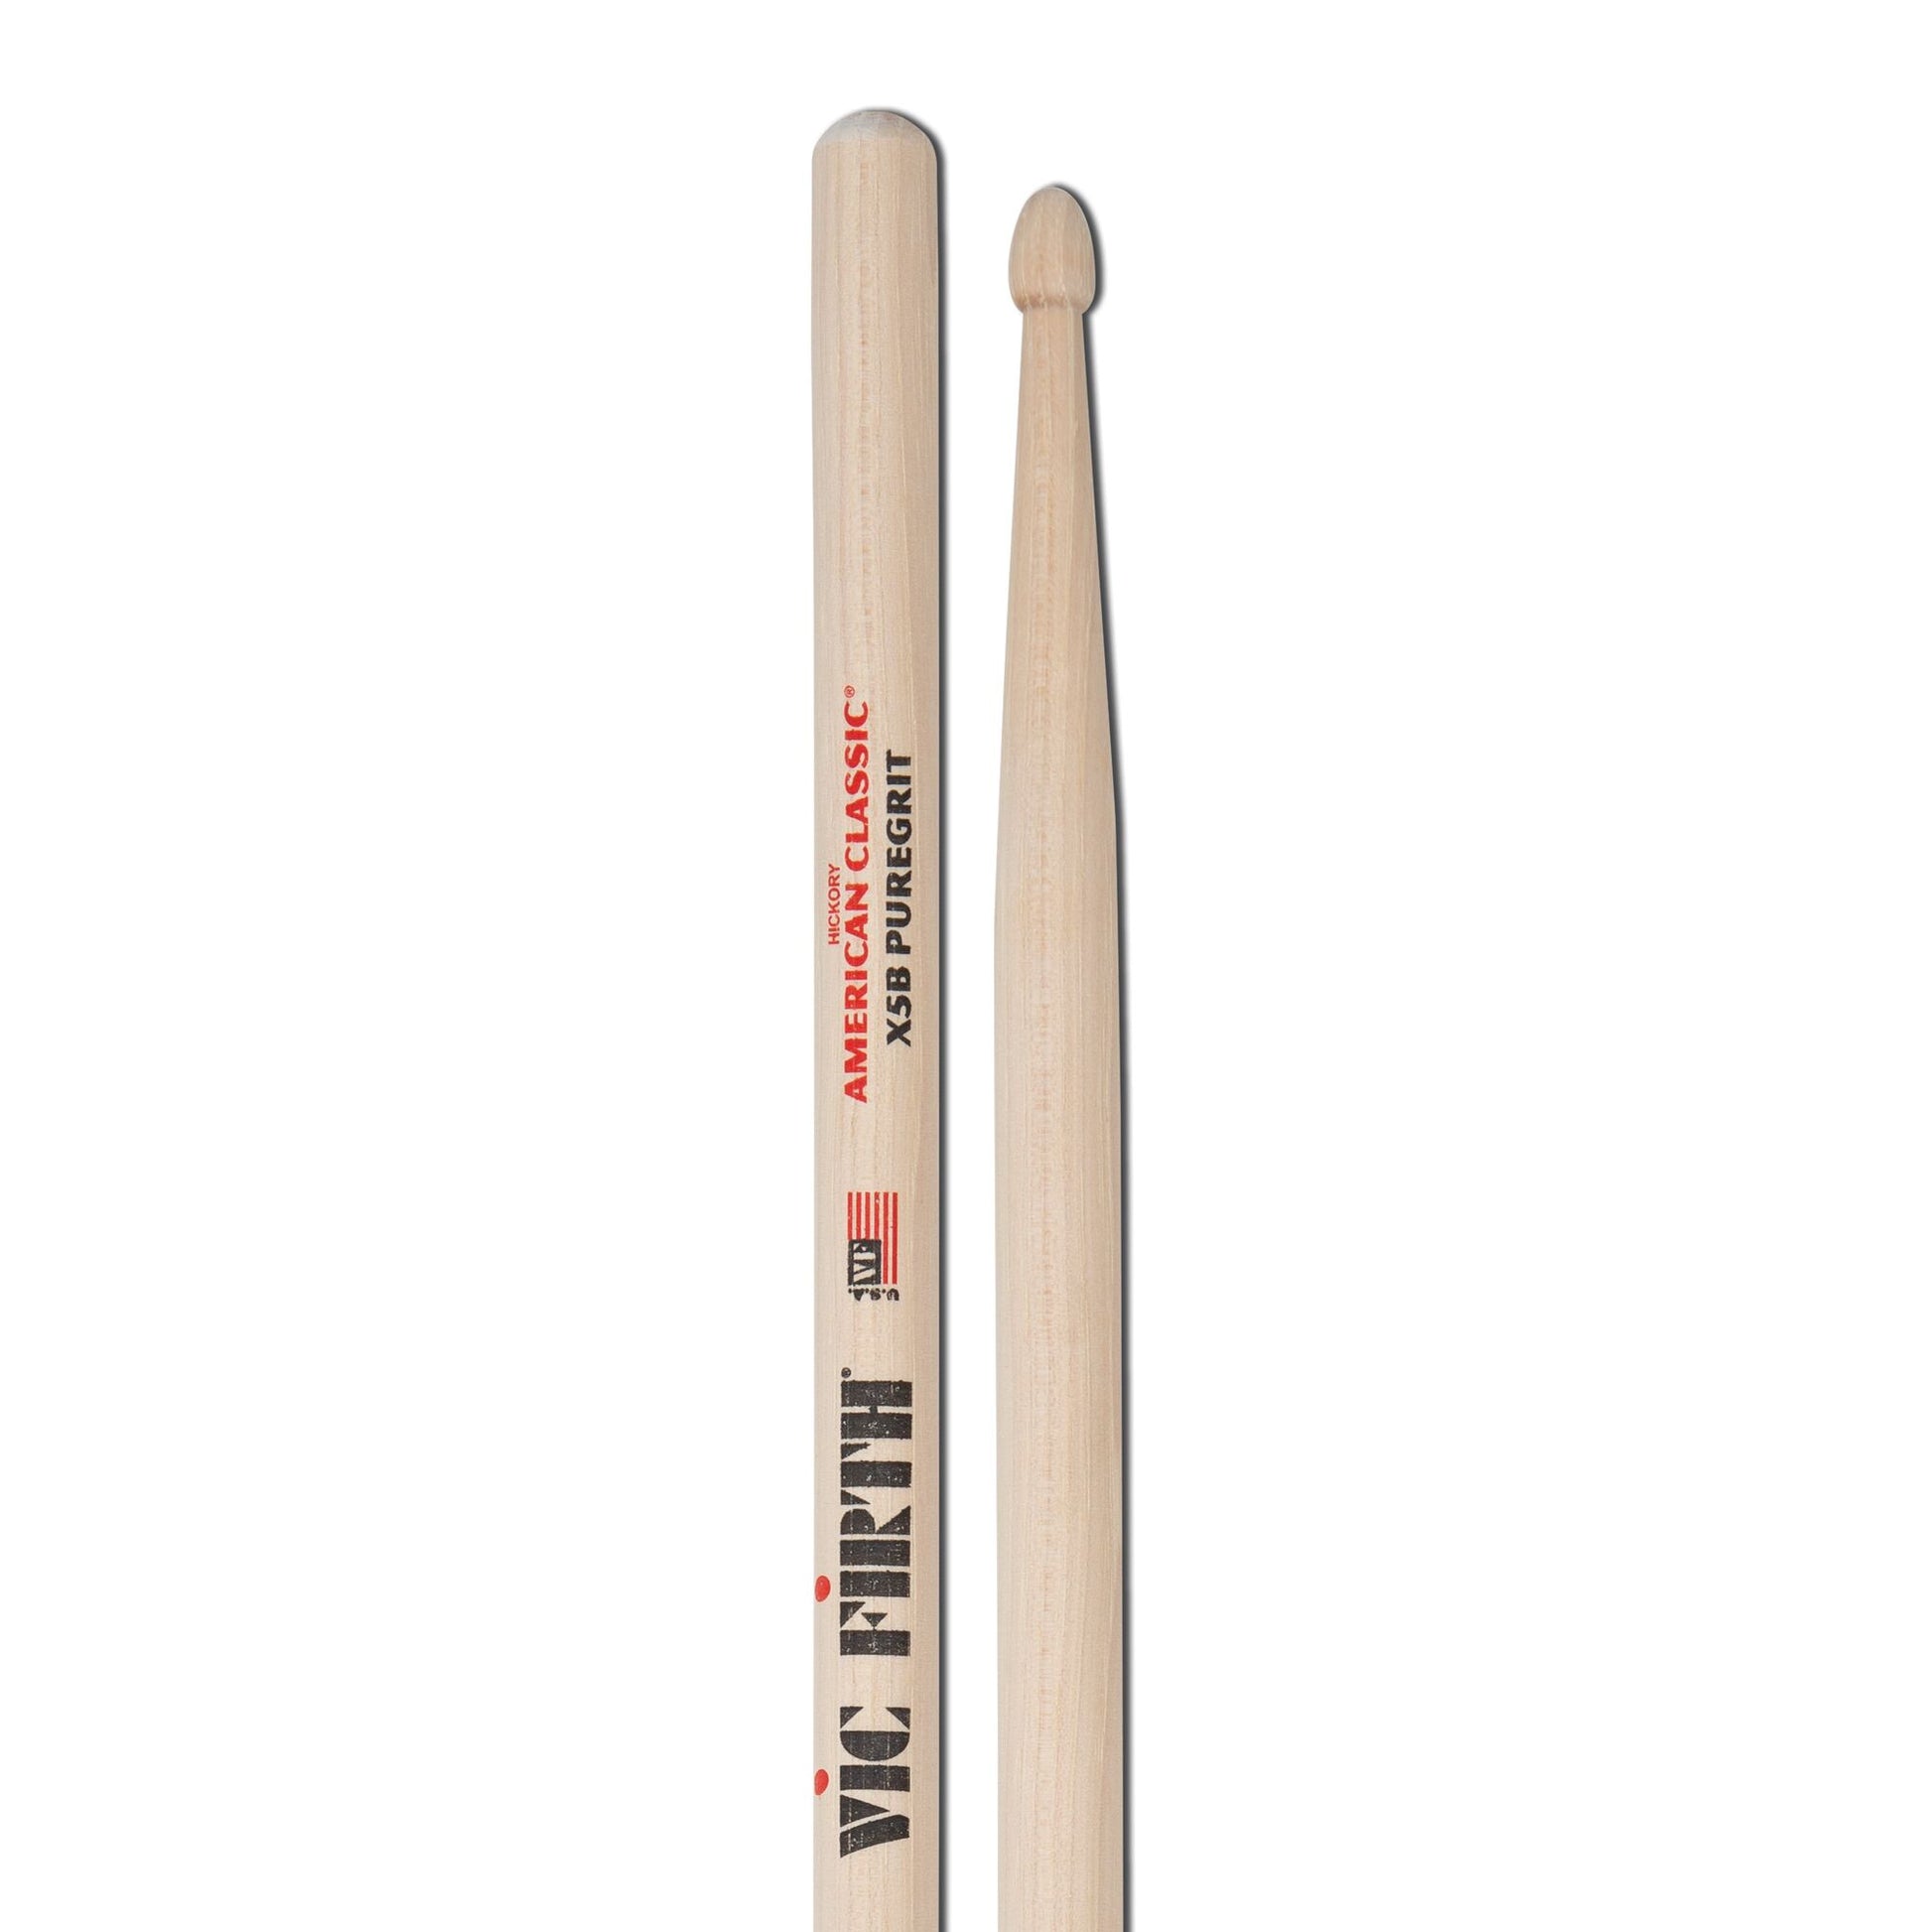 American Classic® 5A PureGrit Drumsticks